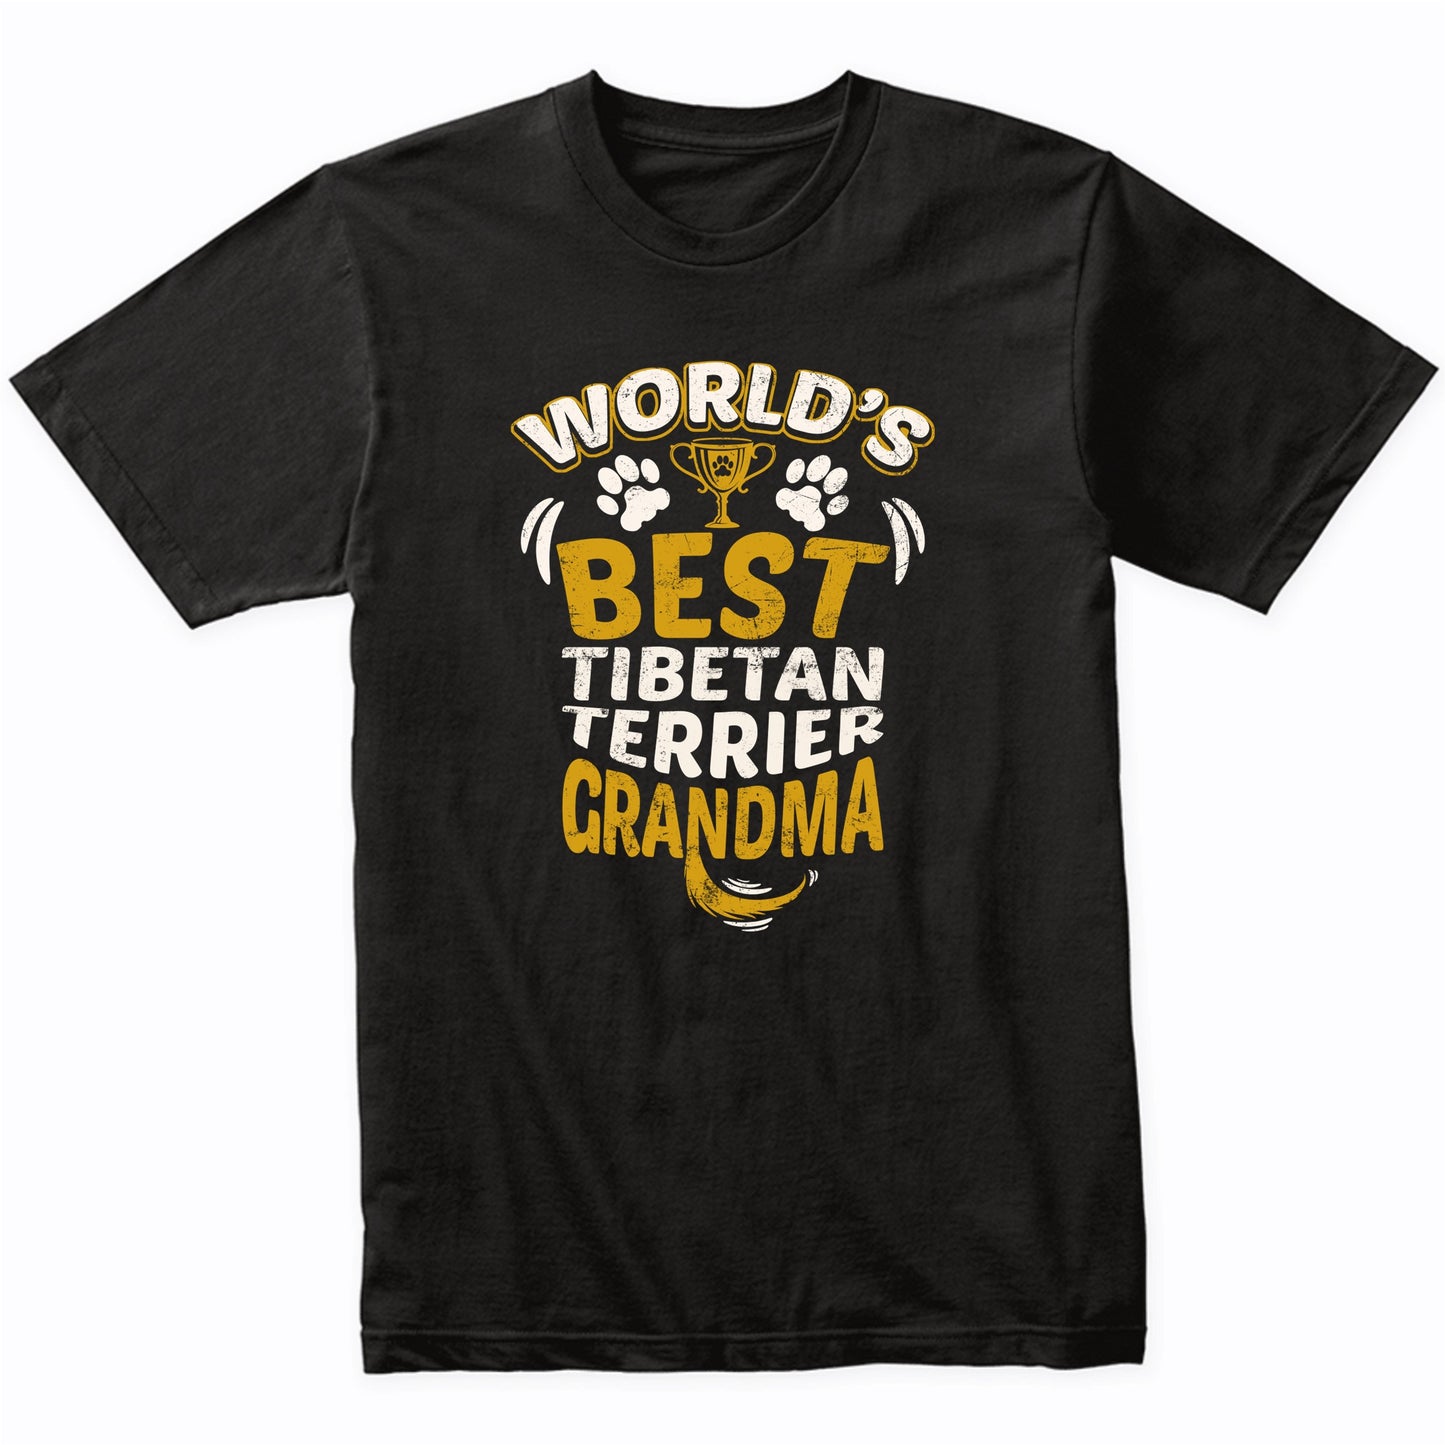 World's Best Tibetan Terrier Grandma Graphic T-Shirt